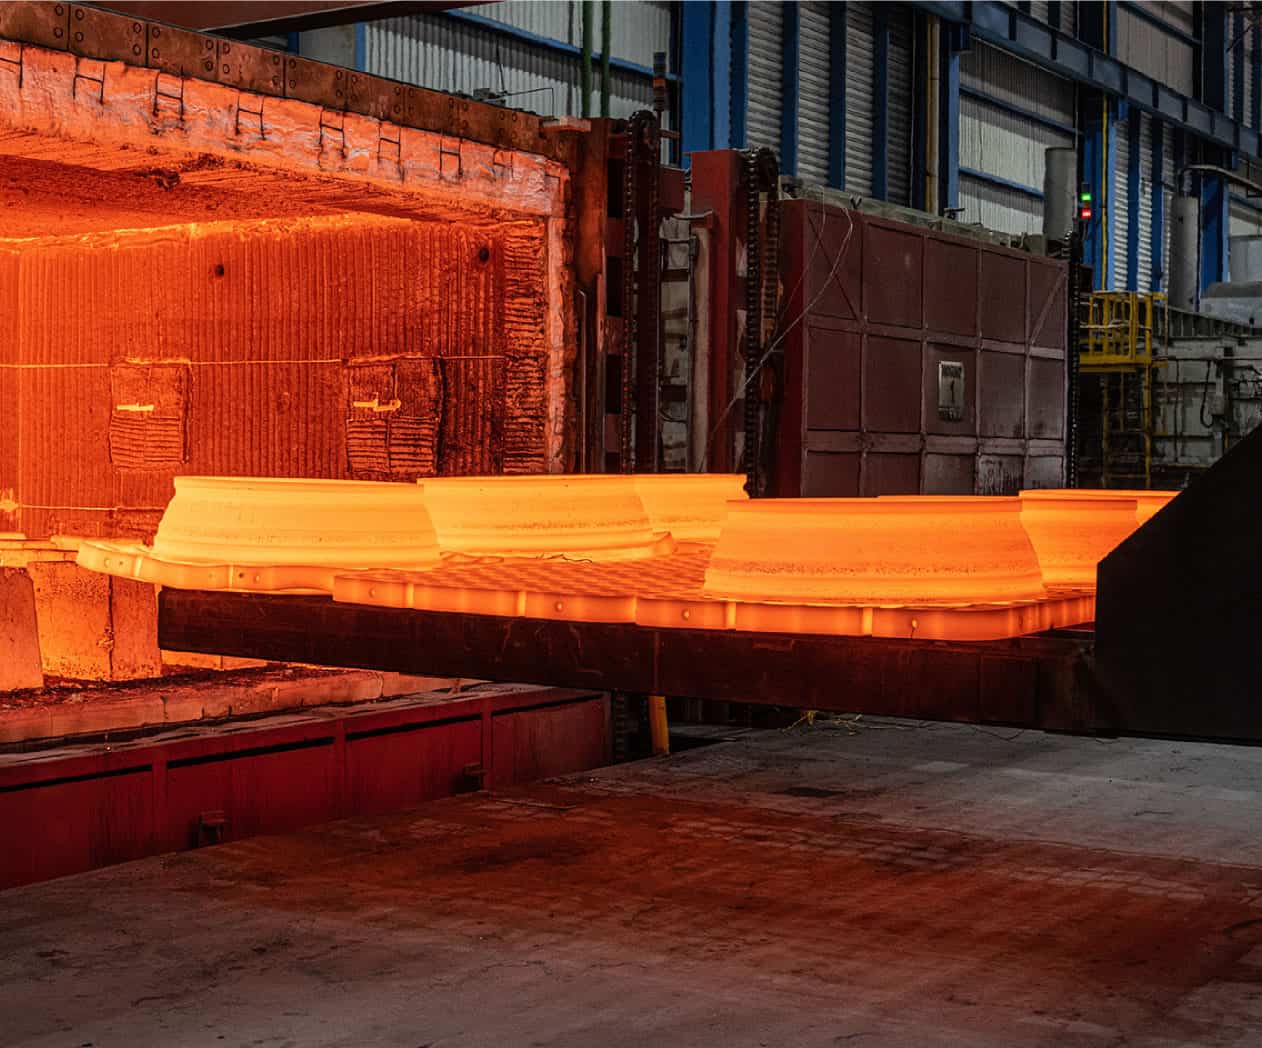 Glowing hot steel slabs being moved in an industrial steel mill.